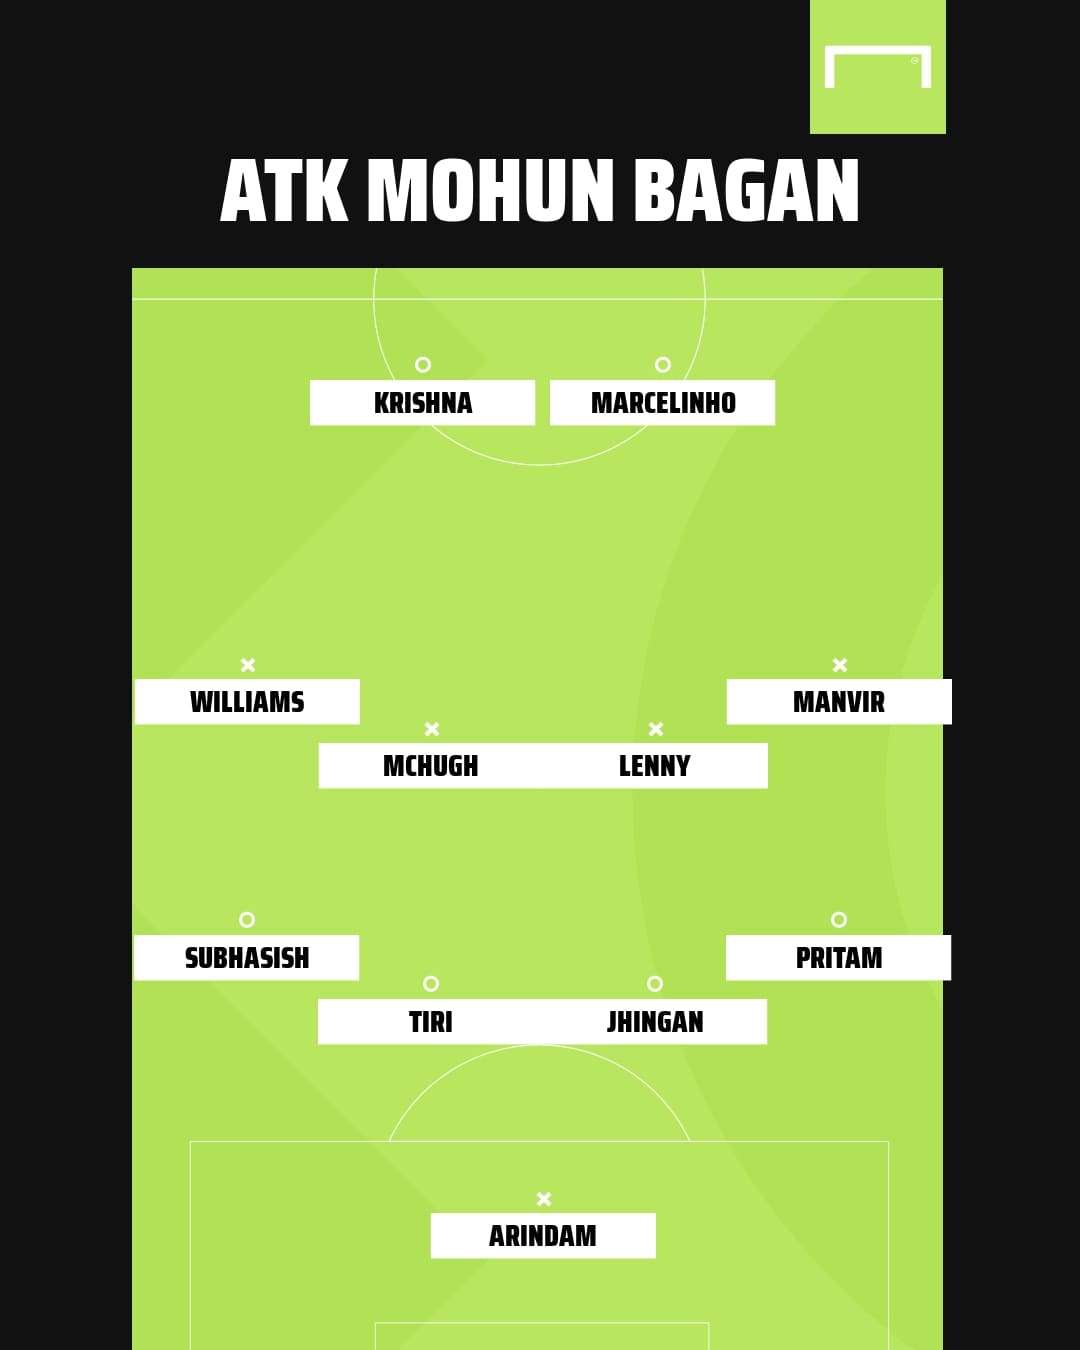 ATK Mohun Bagan lineup